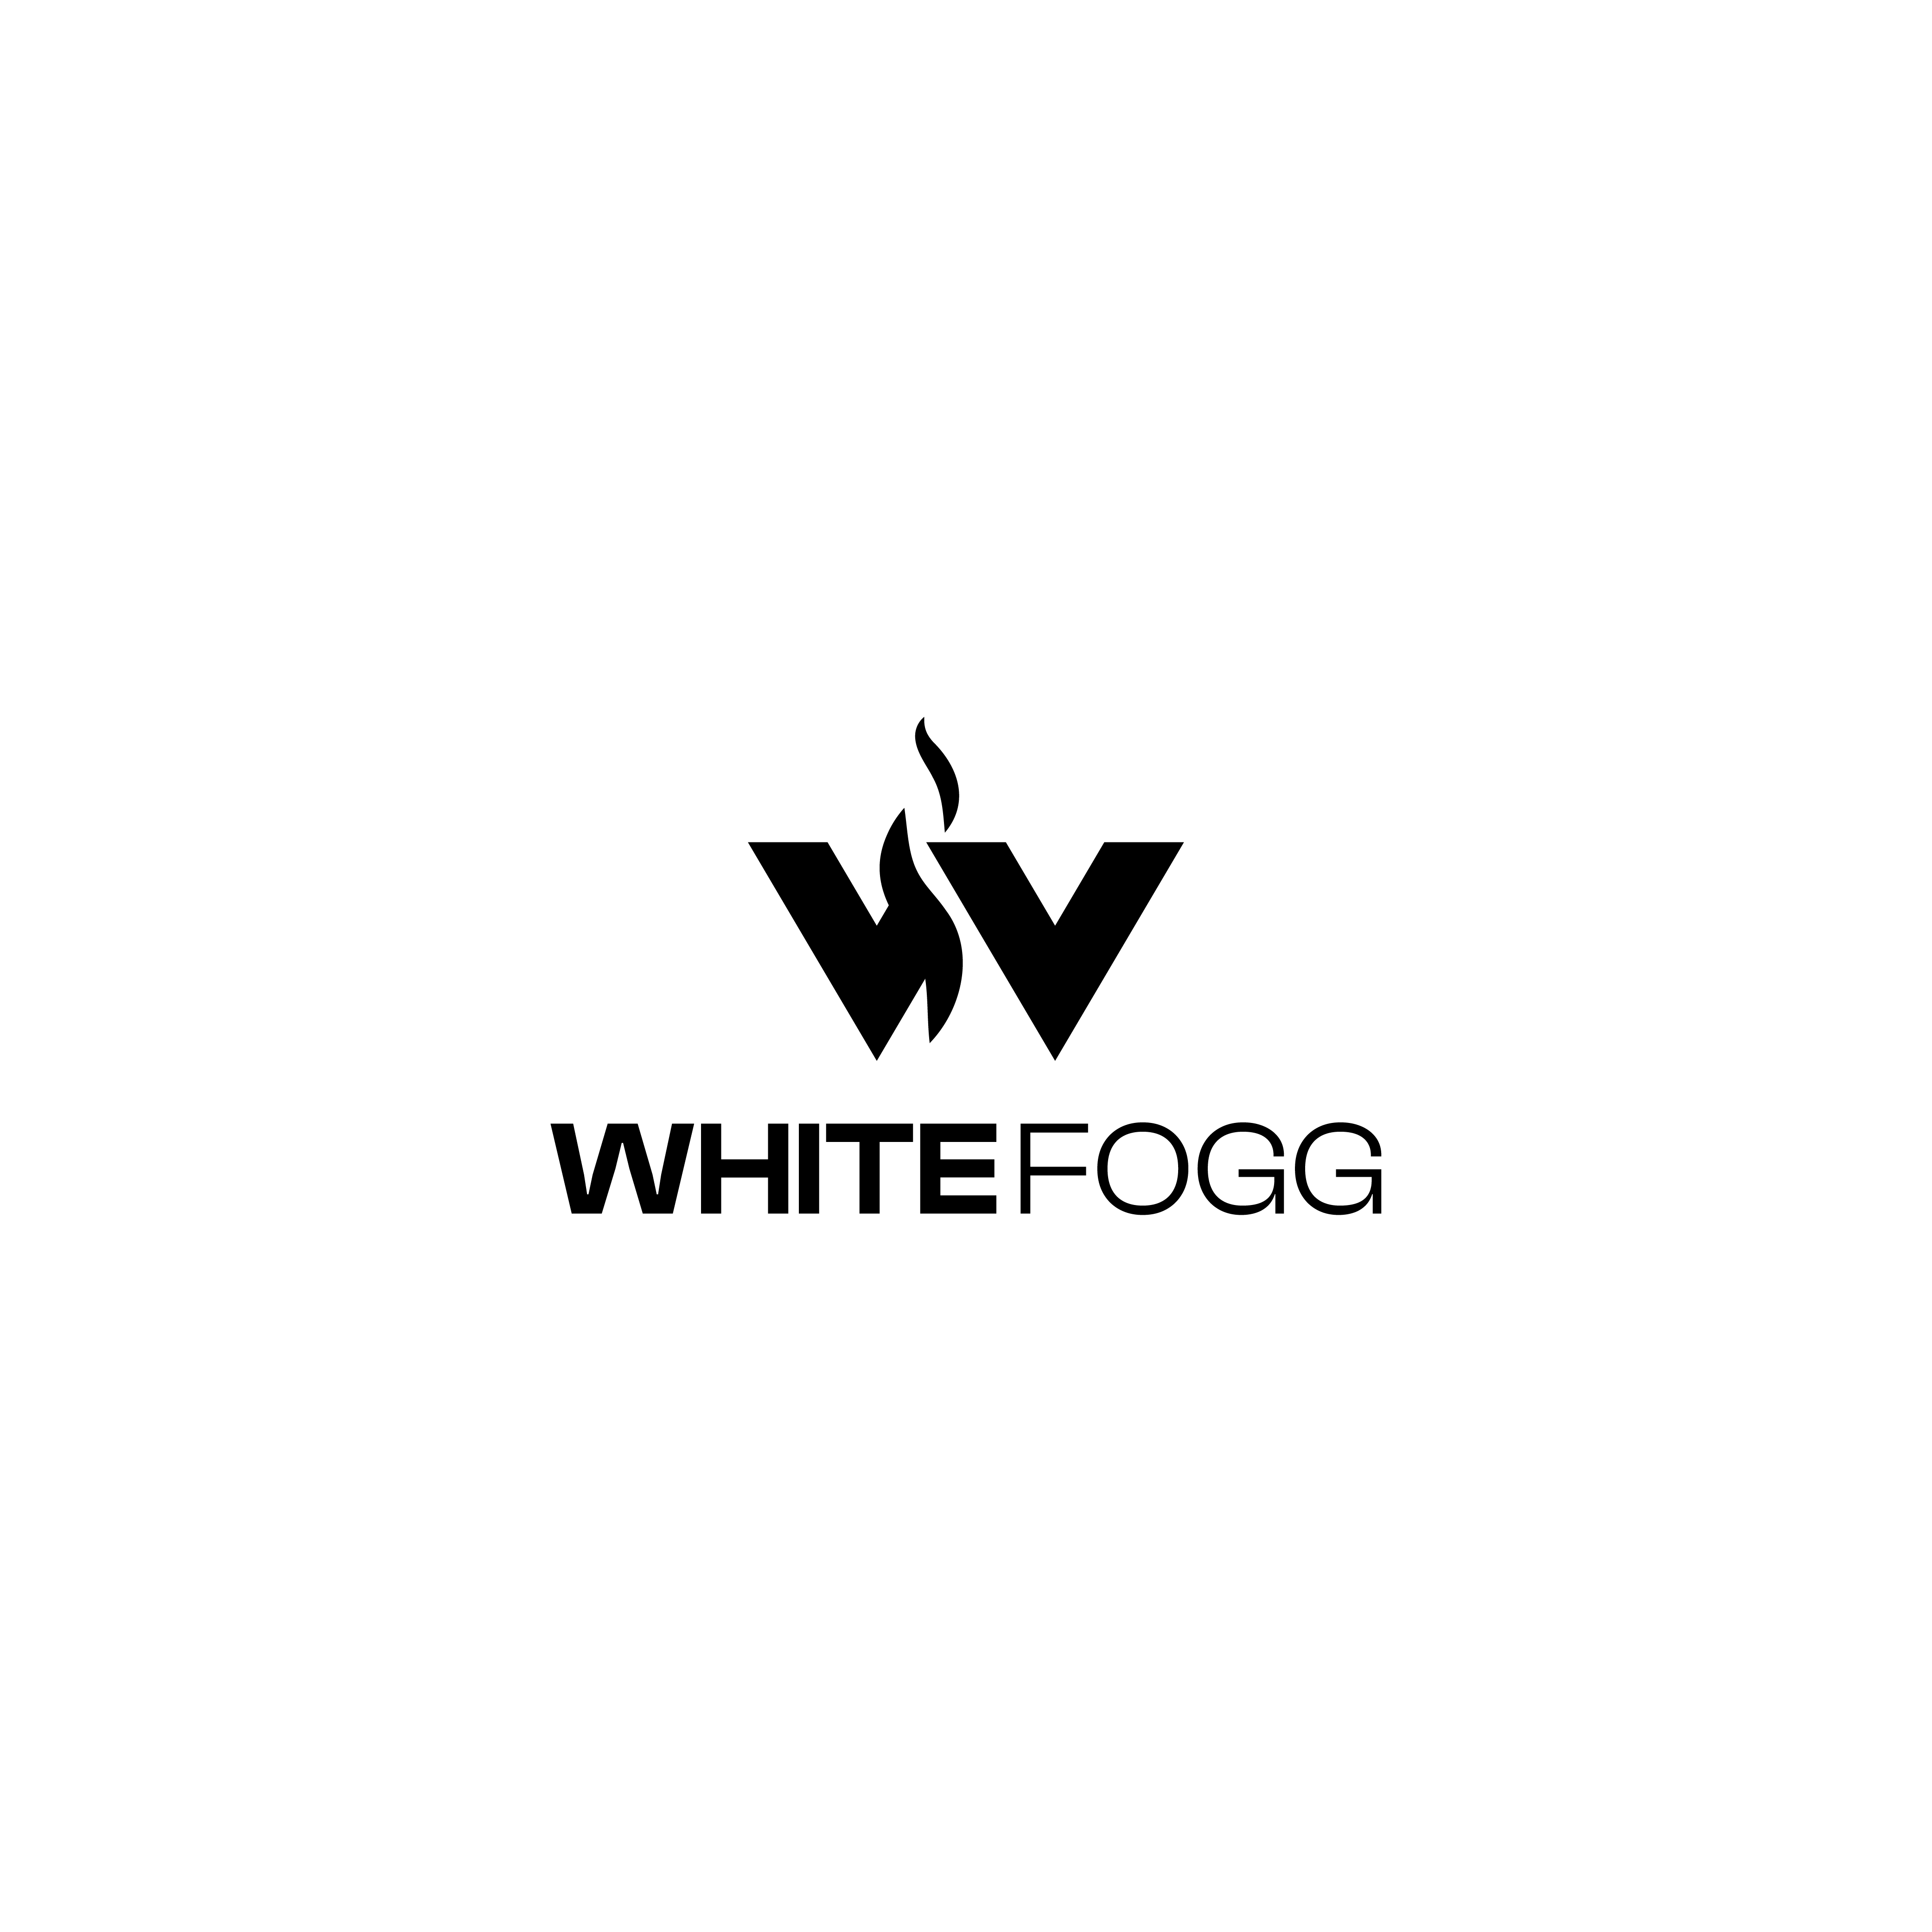 WhiteFogg